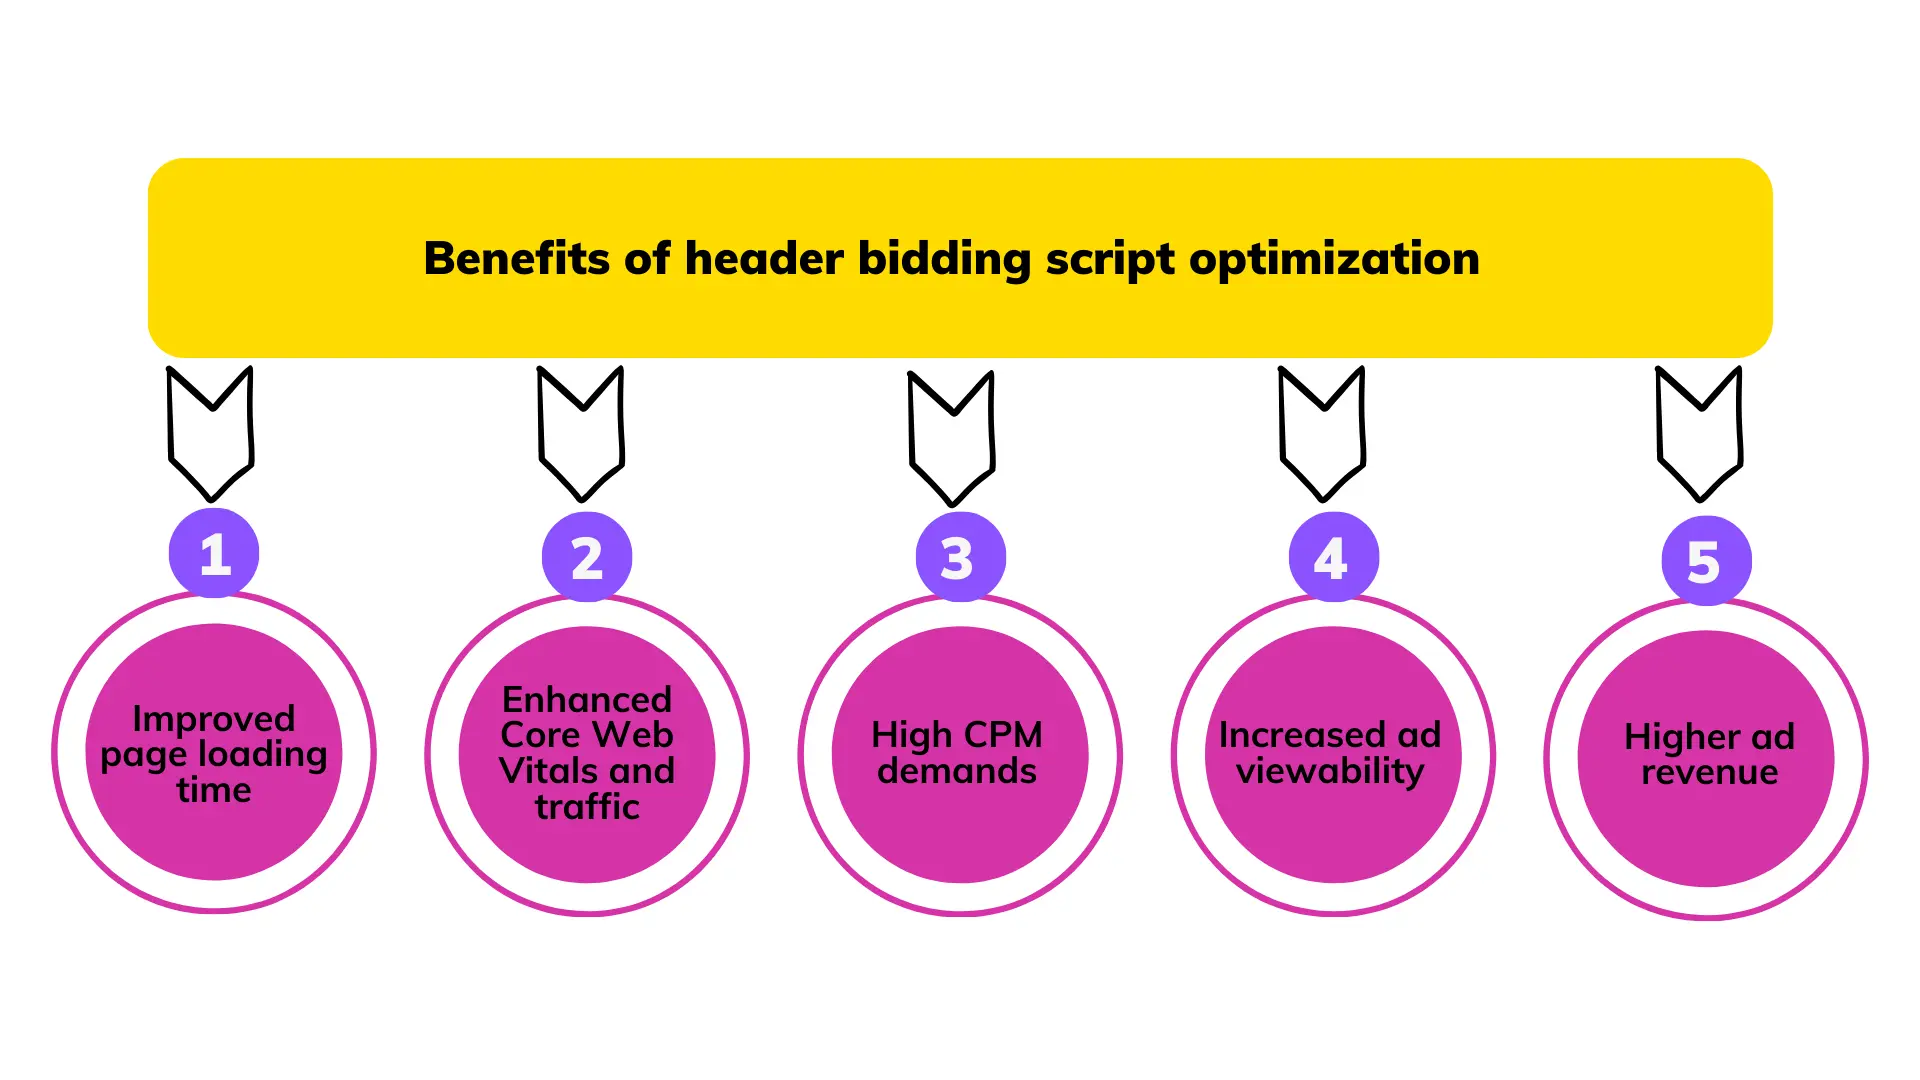 Header bidding script optimization benefits